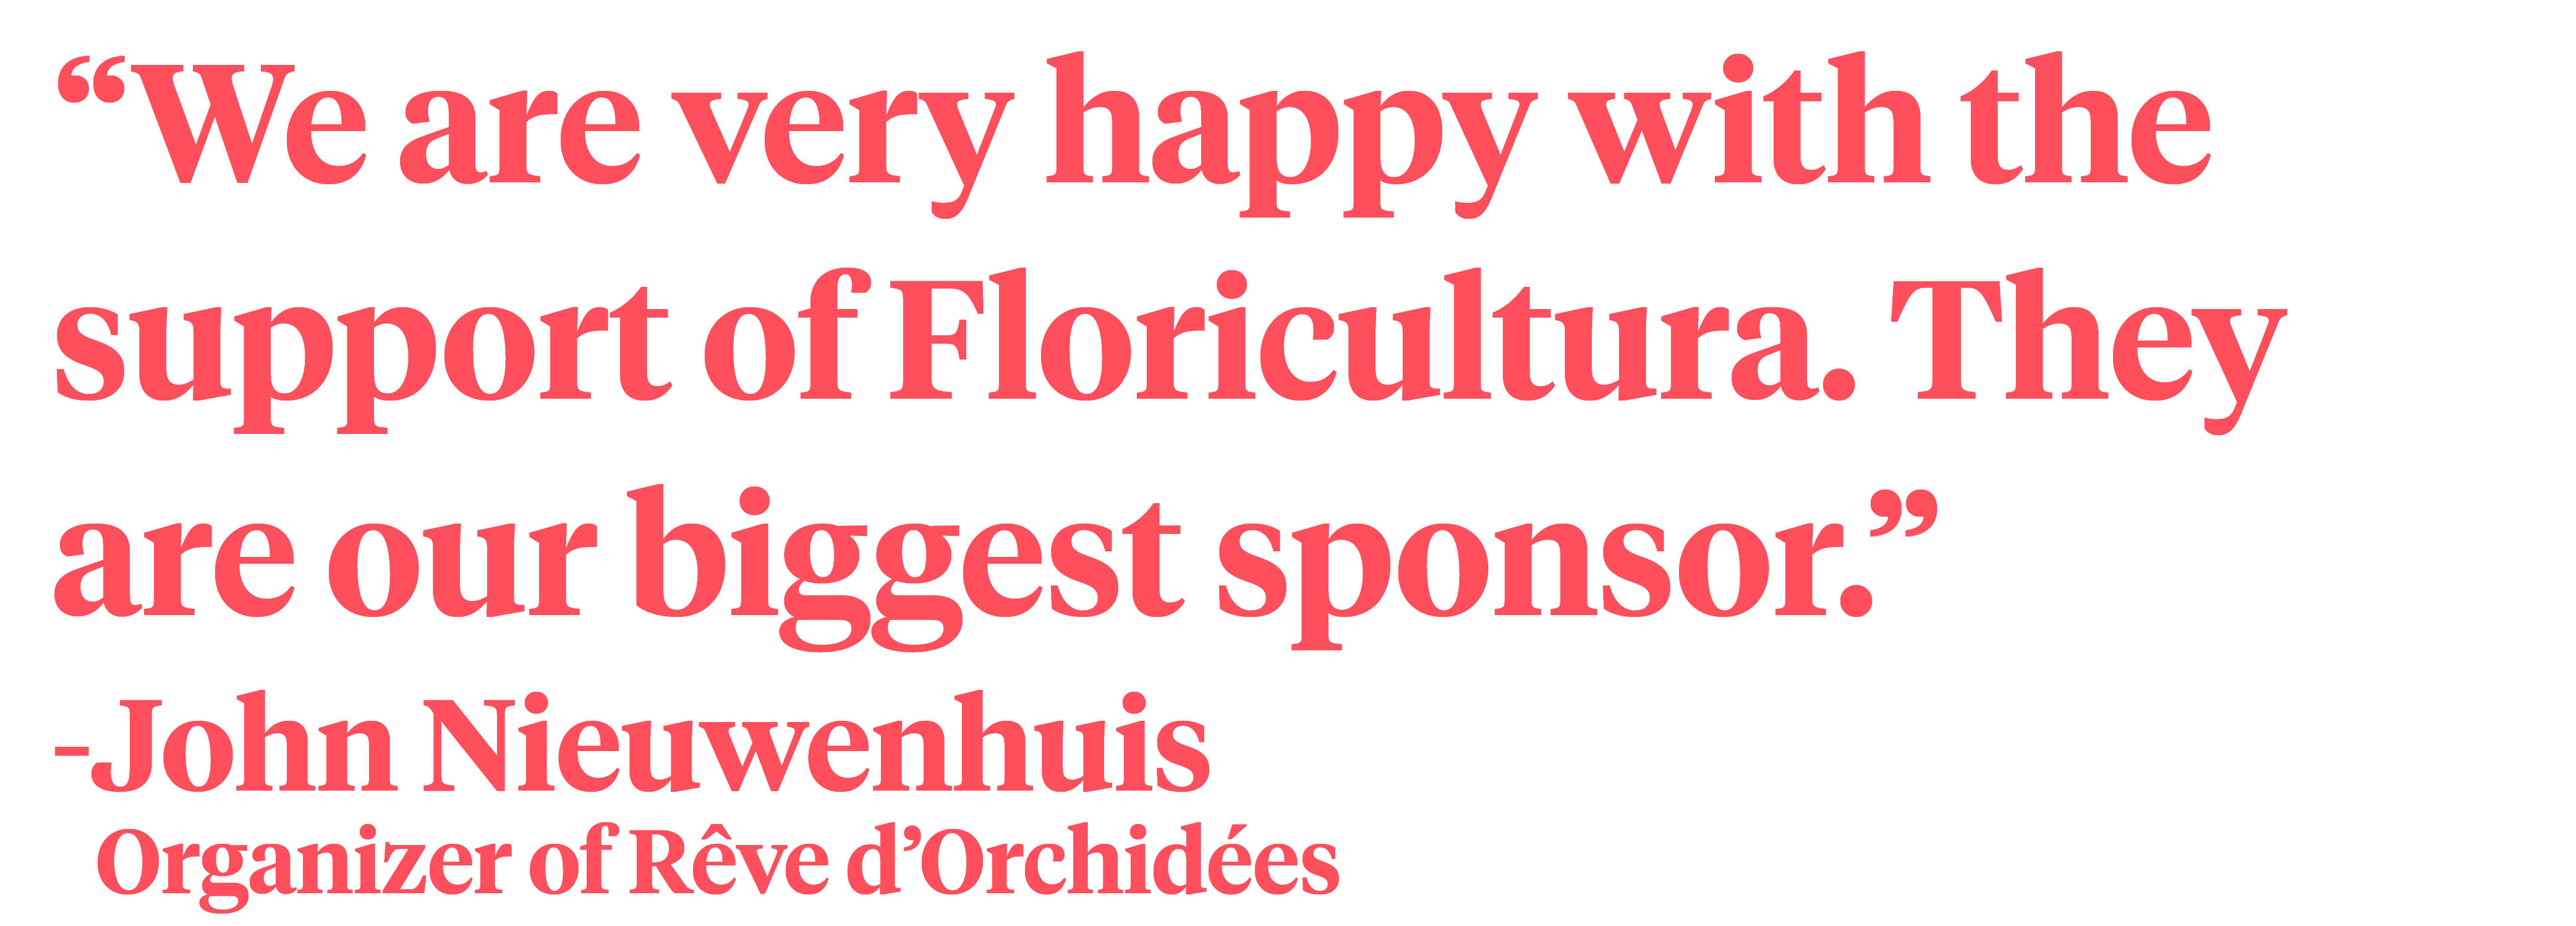 John Nieuwenhuis from Orchideeënvereniging 't Gooi quote on Thursd